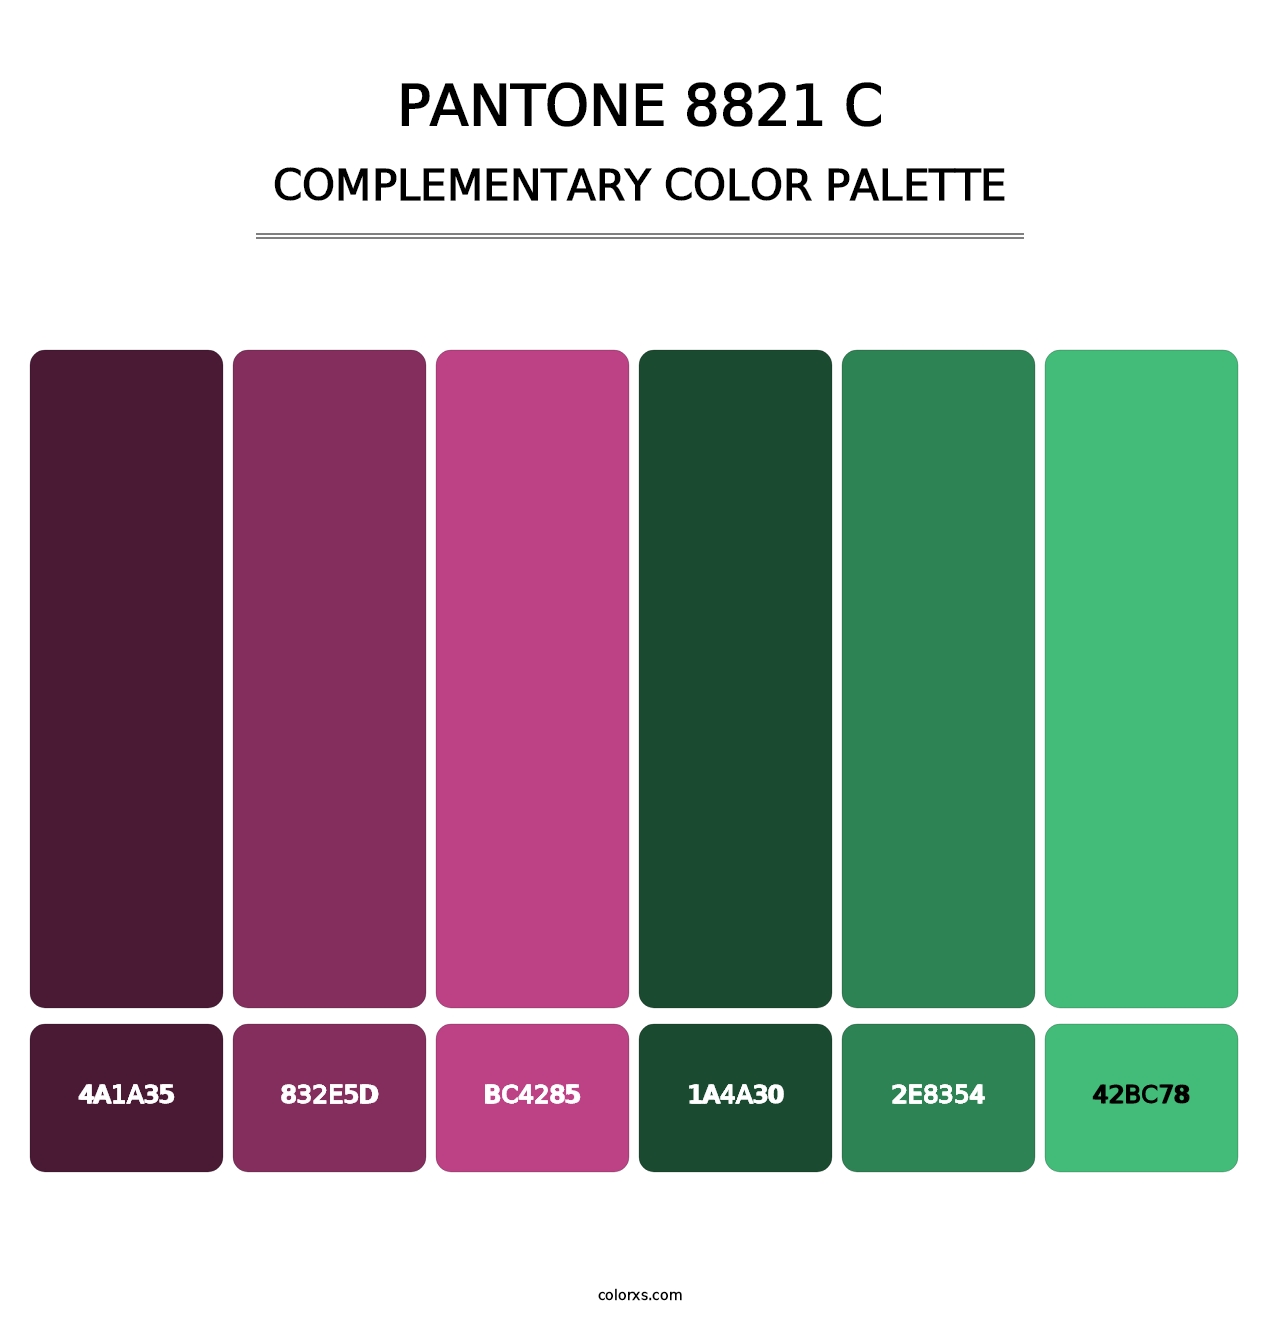 PANTONE 8821 C - Complementary Color Palette